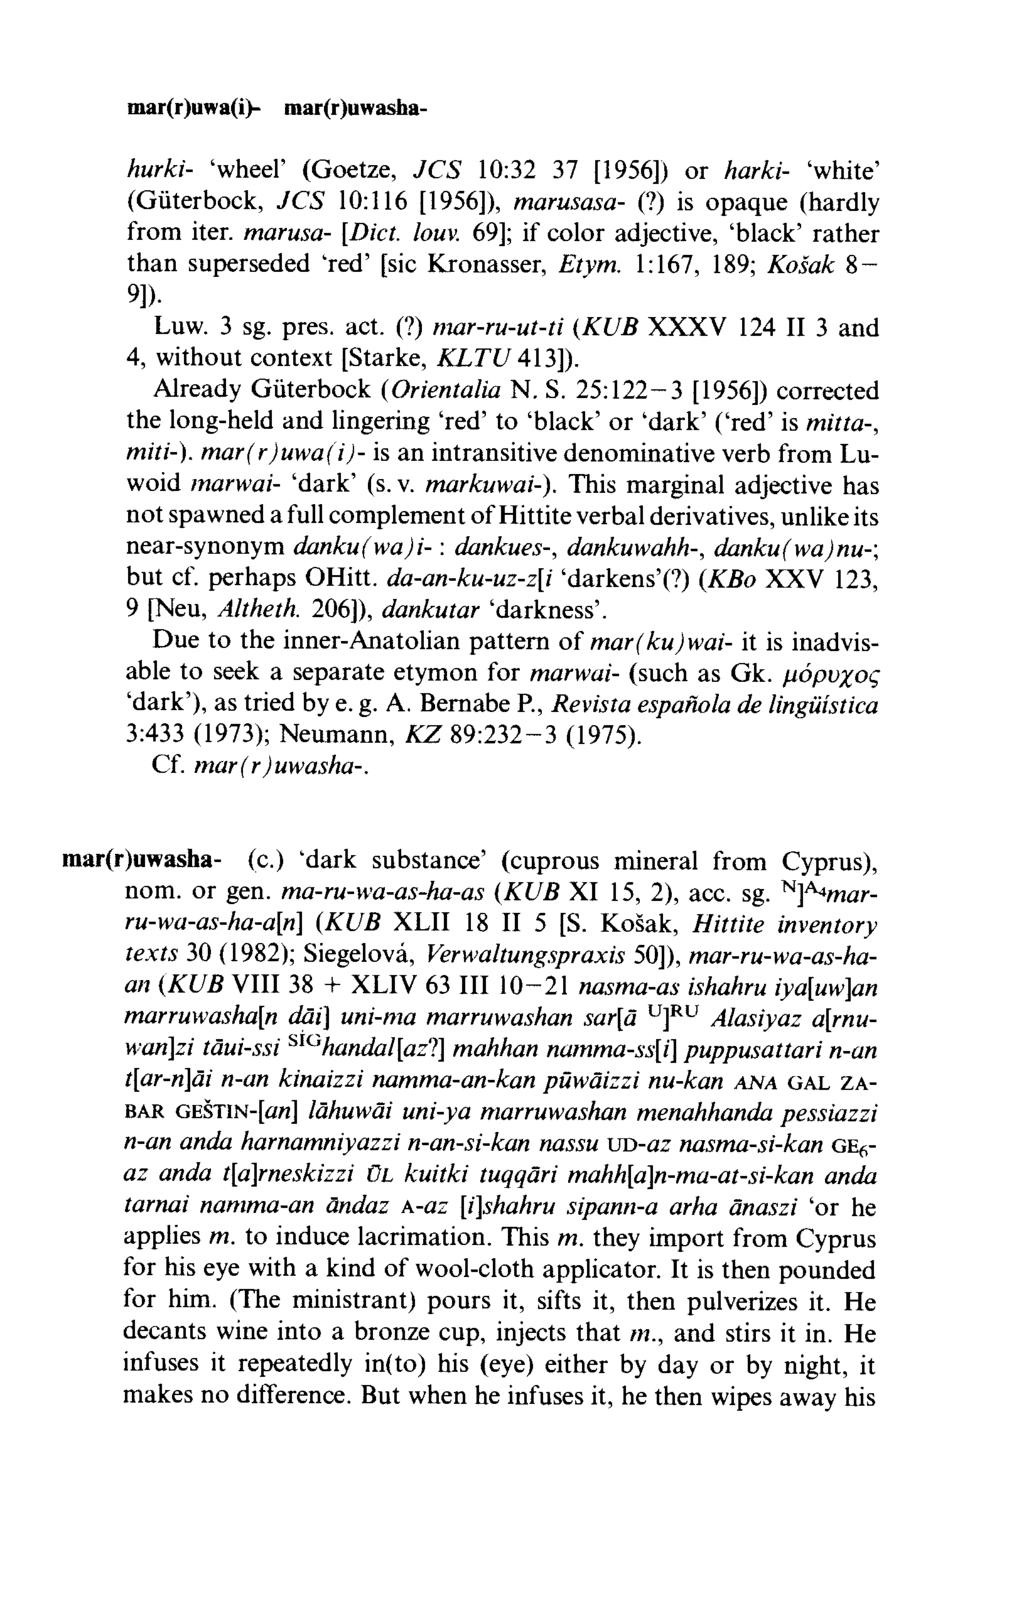 mar(r)uwa(i>- mar(r)uwashahurki- wheel (Goetze, JC'S 10:32 37 [1956]) or harki- white (Güterbock, JC S 10:116 [1956]), marusasa- (?) is opaque (hardly from iter, marusa- [Diet. lorn.